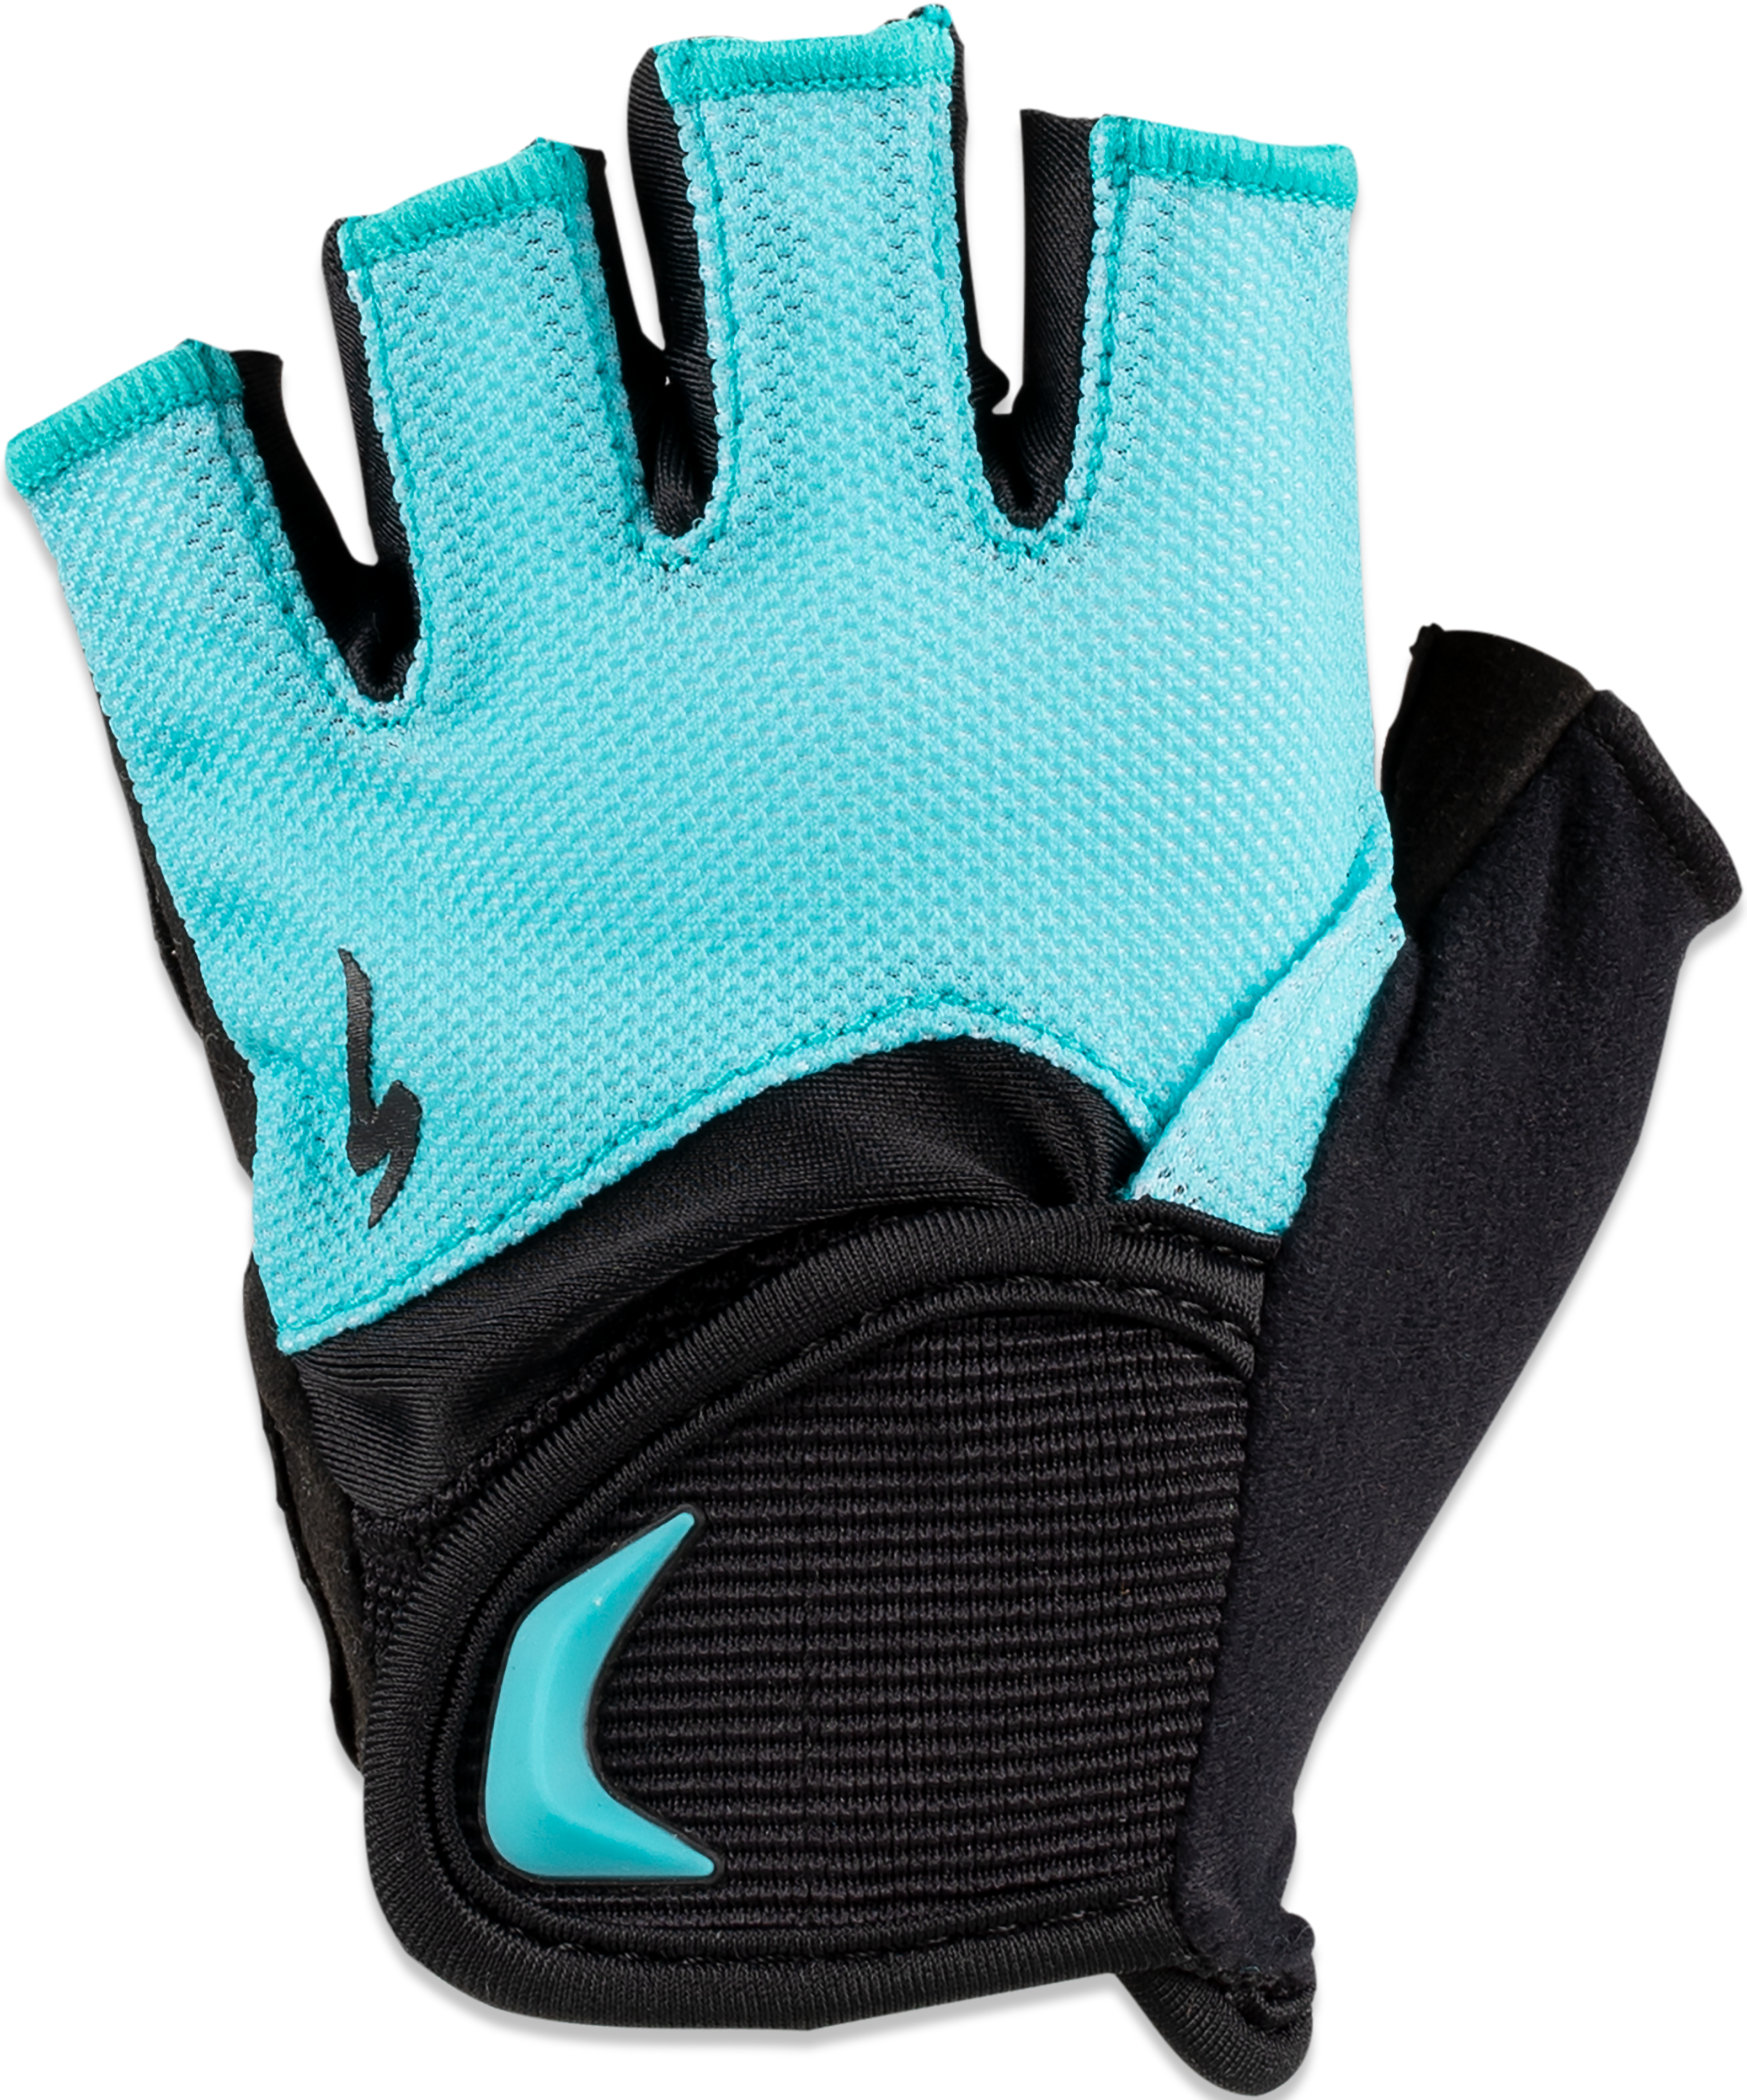 specialized road bike gloves